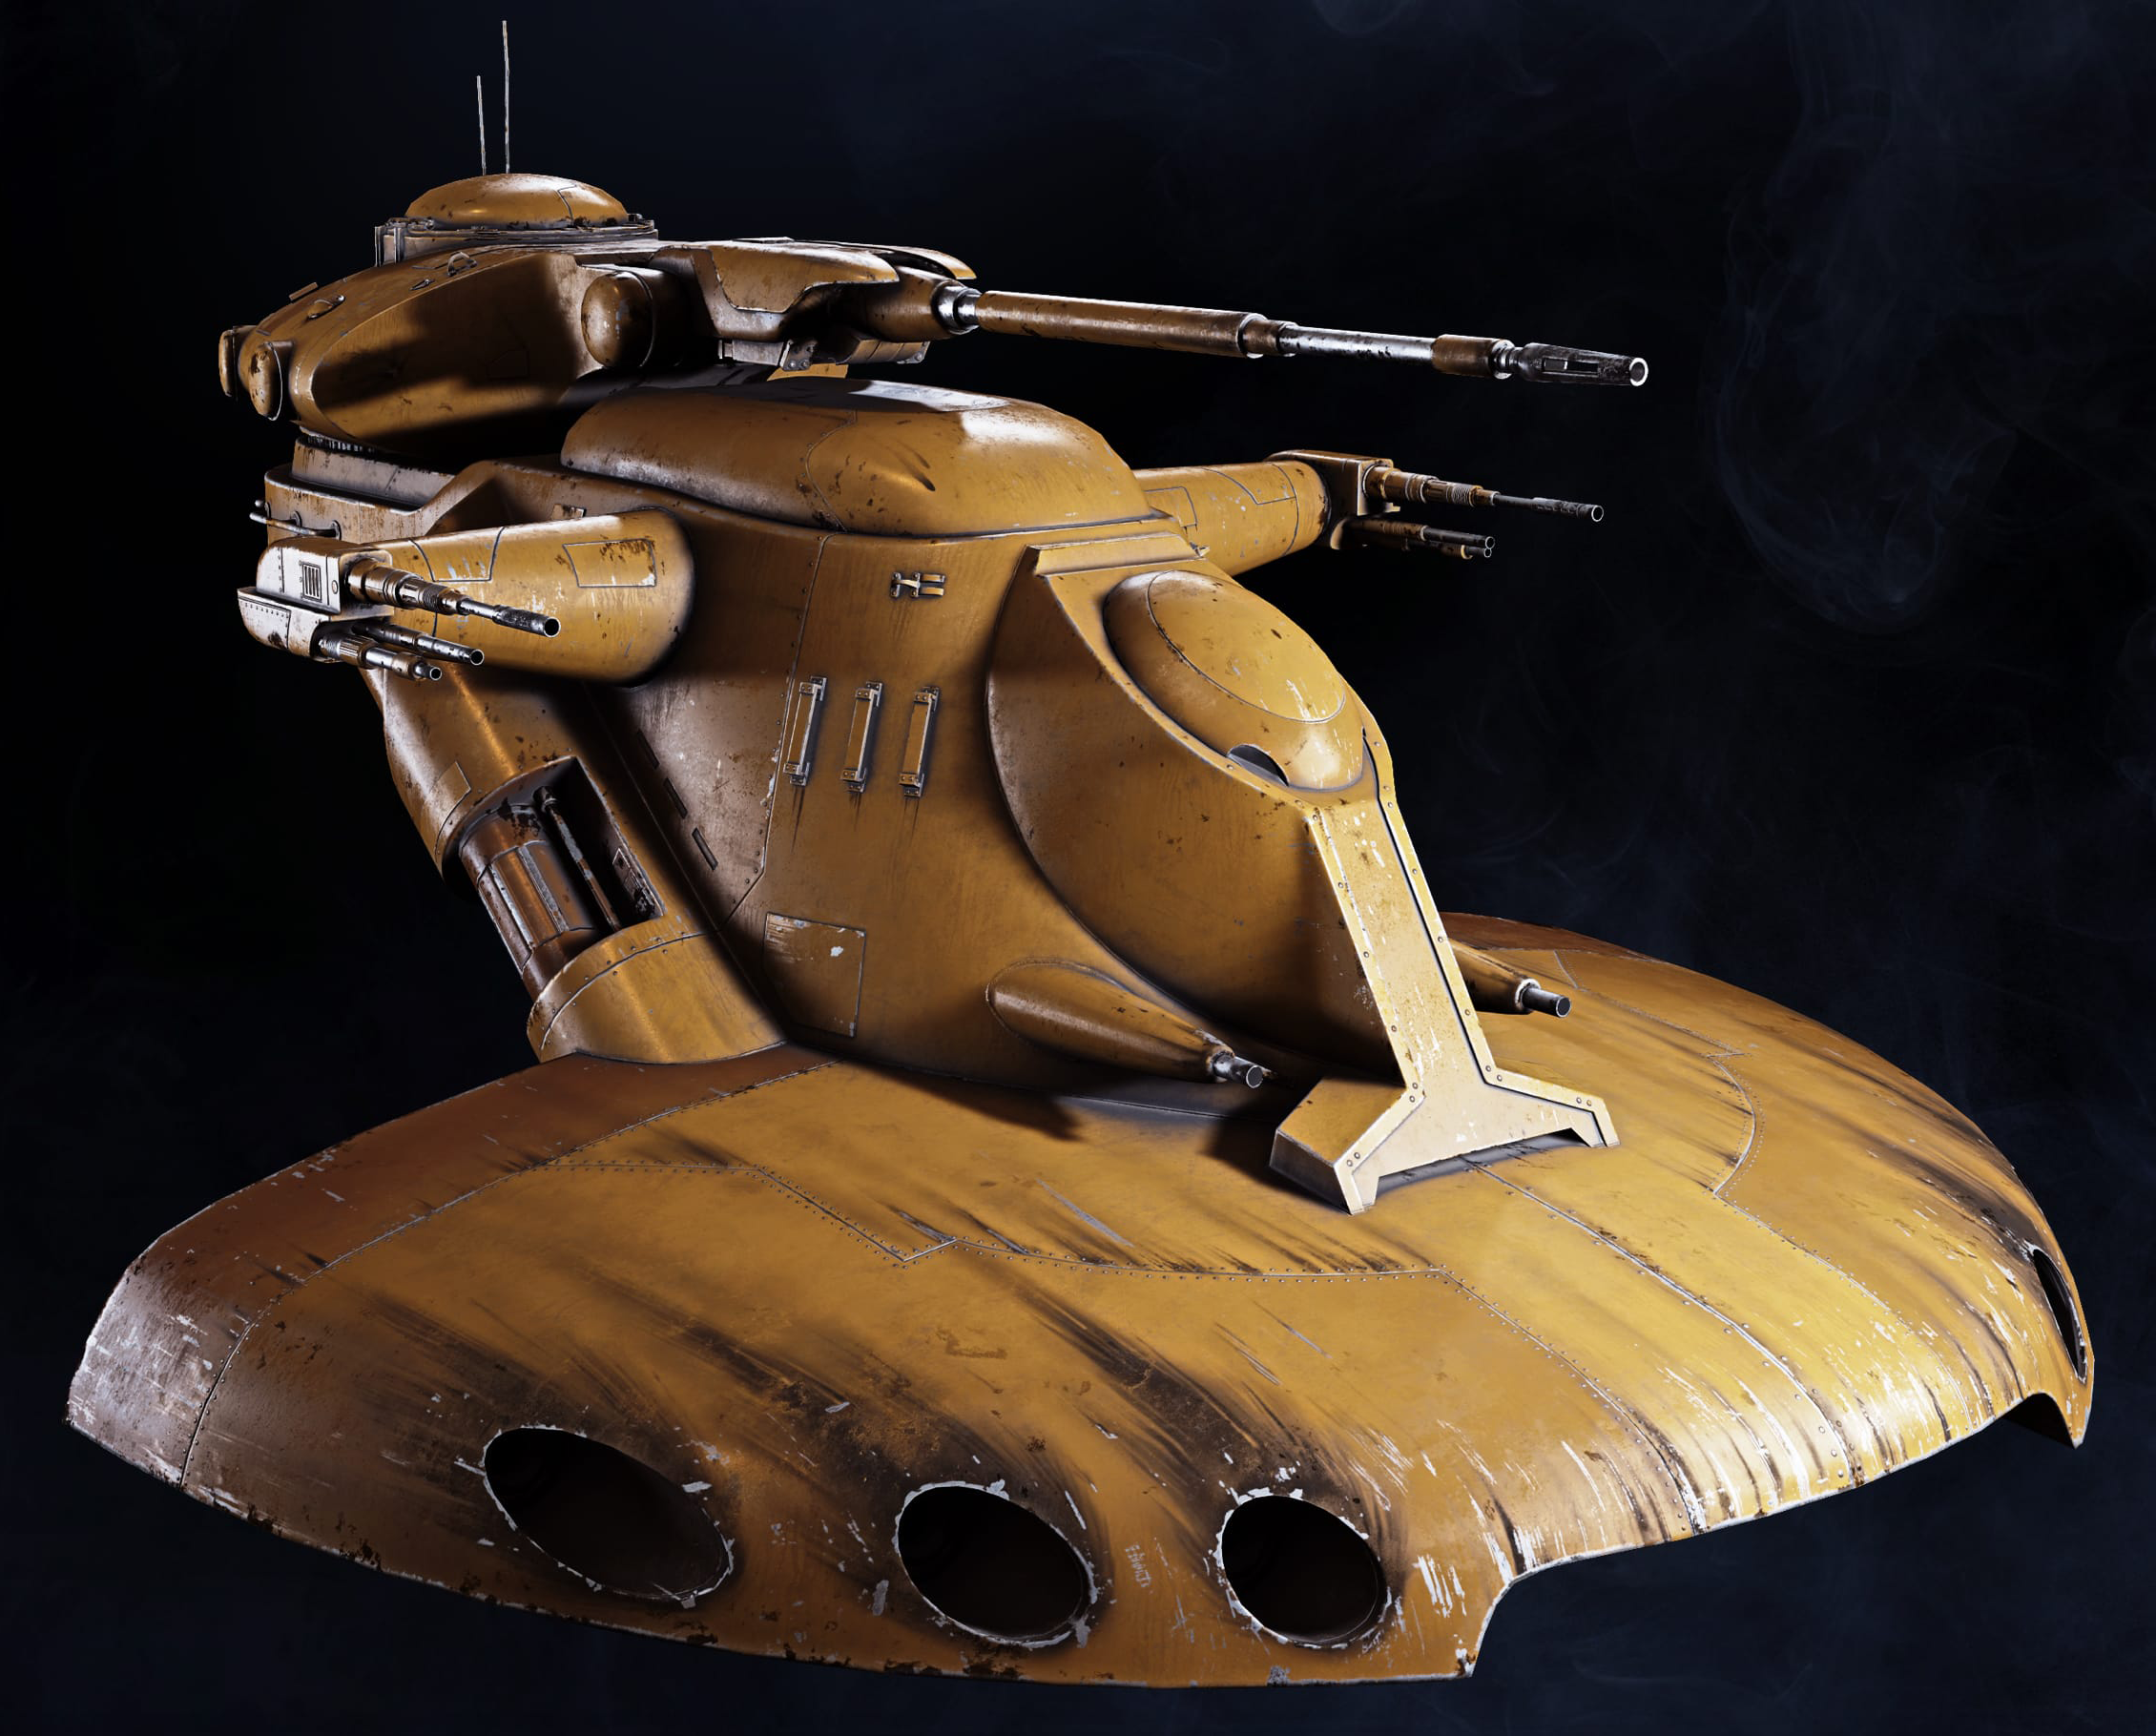 star wars armored assault tank